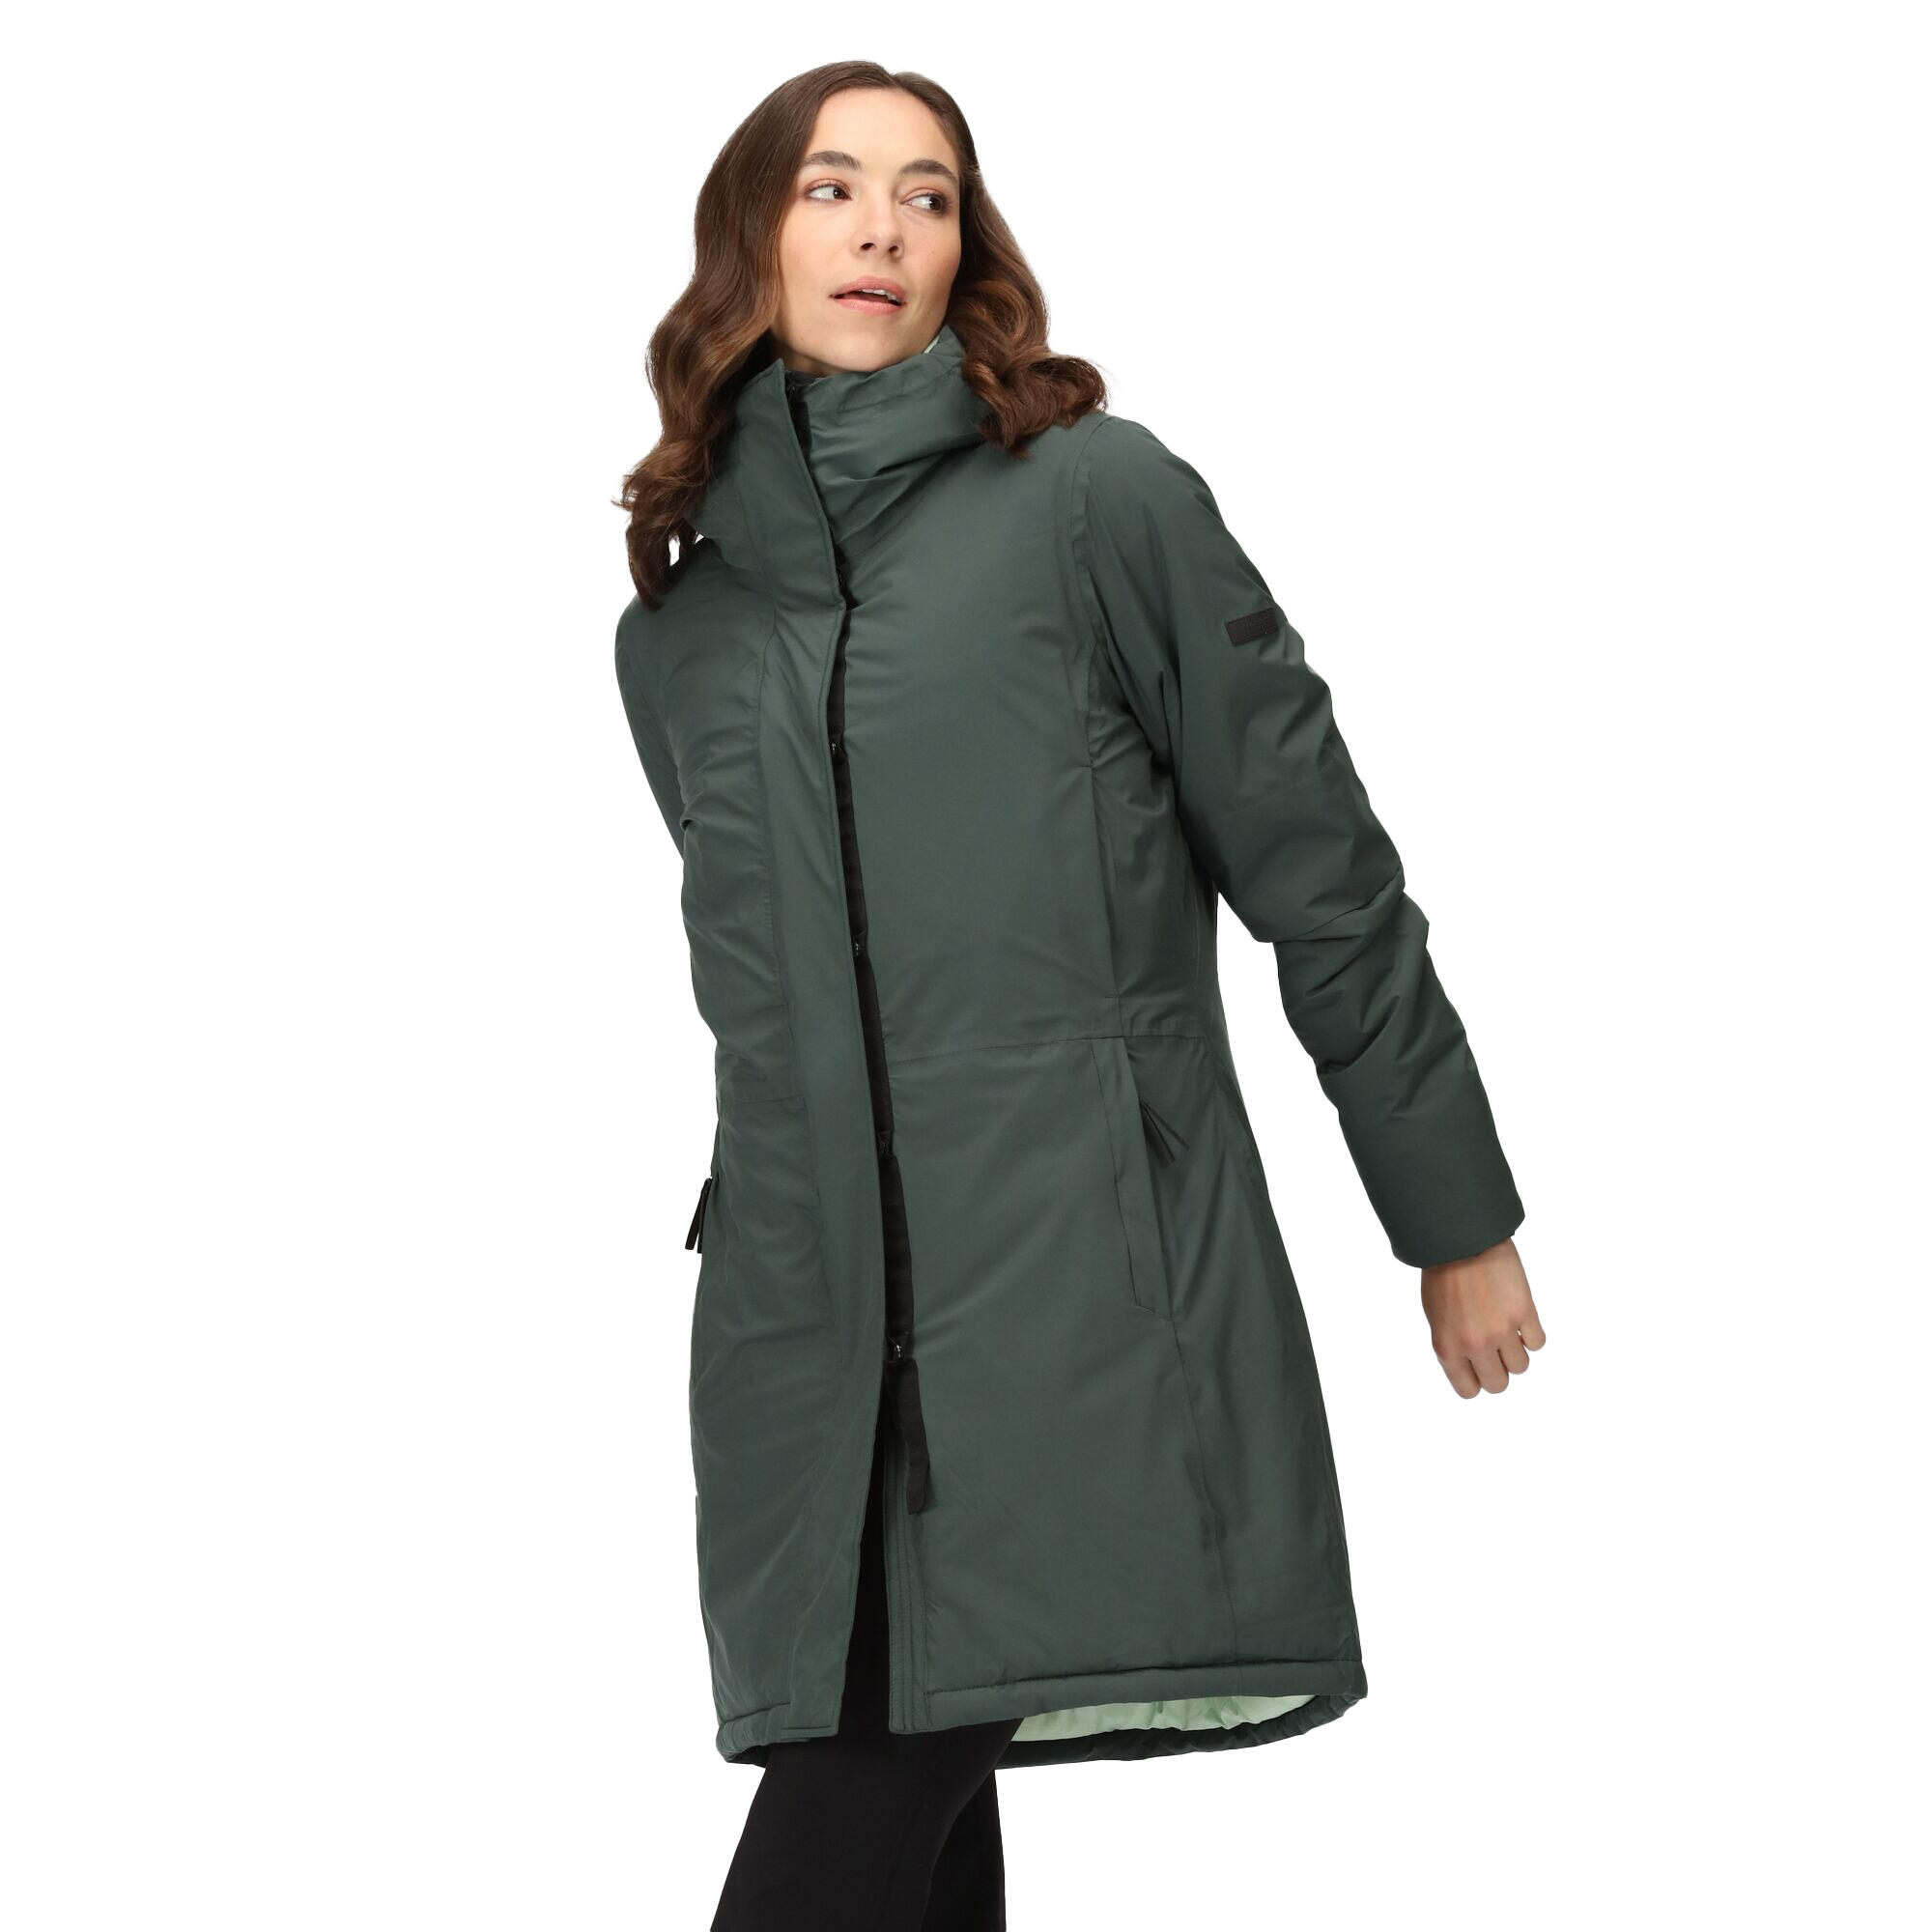 Womens/Ladies Yewbank III Waterproof Jacket (Darkest Spruce/Quiet Green) 4/5